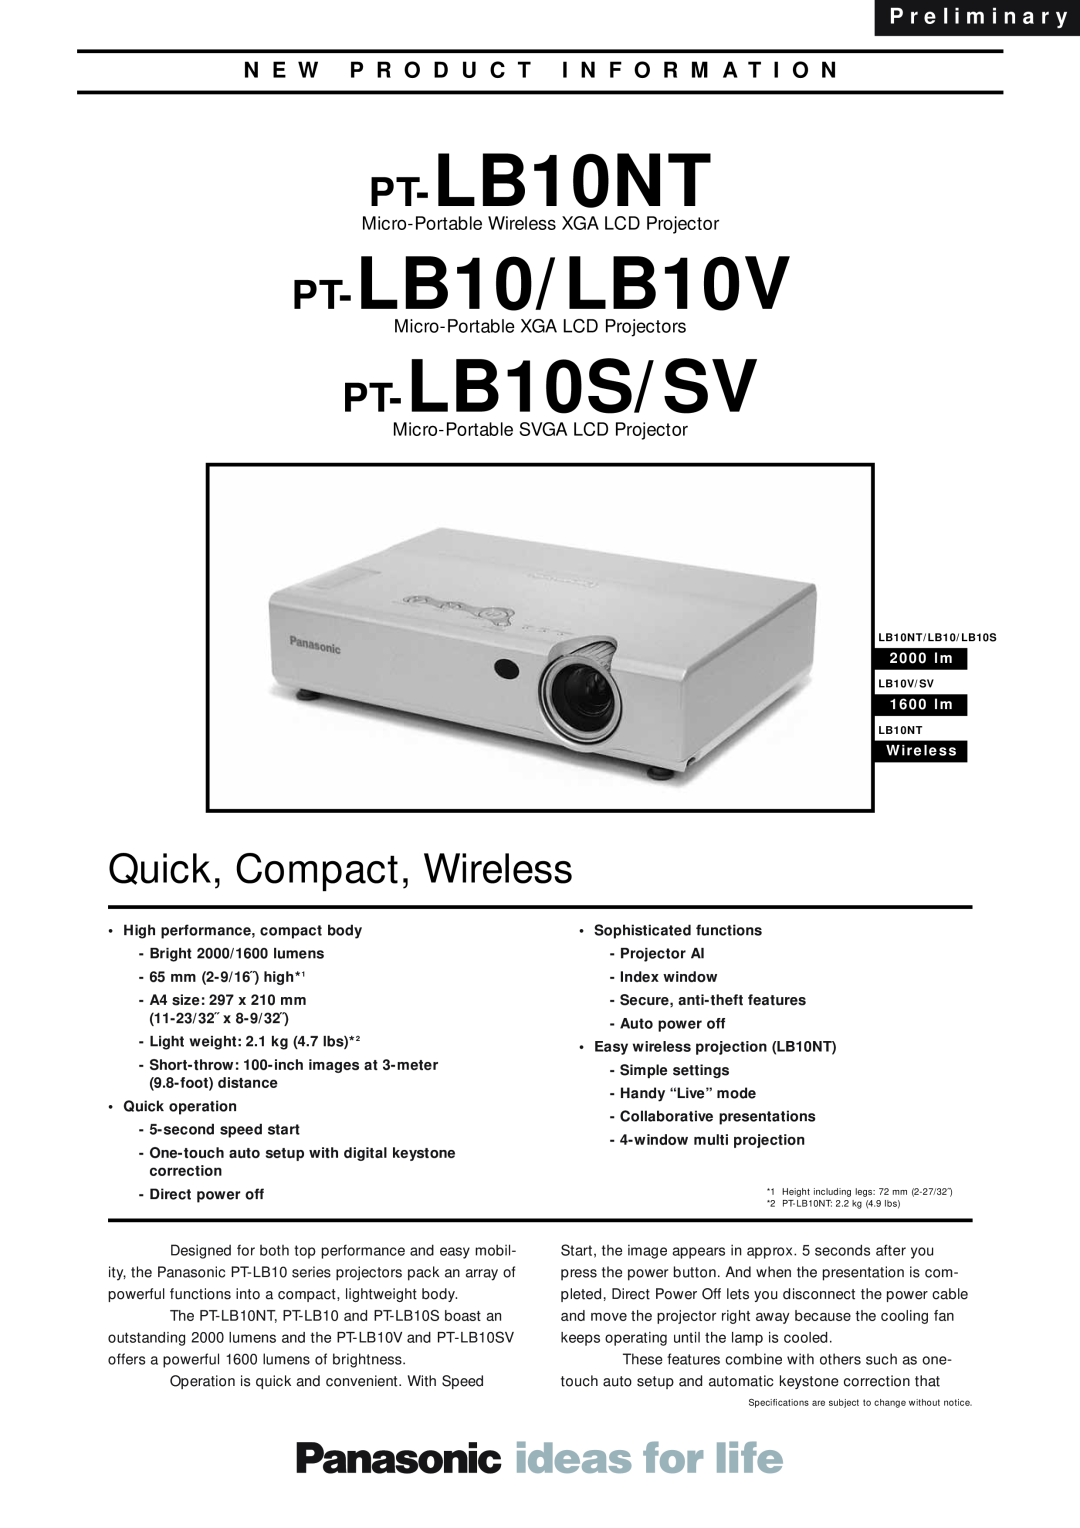 Panasonic PT-LB10V specifications PT-LB10NT, PT-LB10/LB10V, PT-LB10S/SV, Quick, Compact, Wireless, P r e l i m i n a r y 